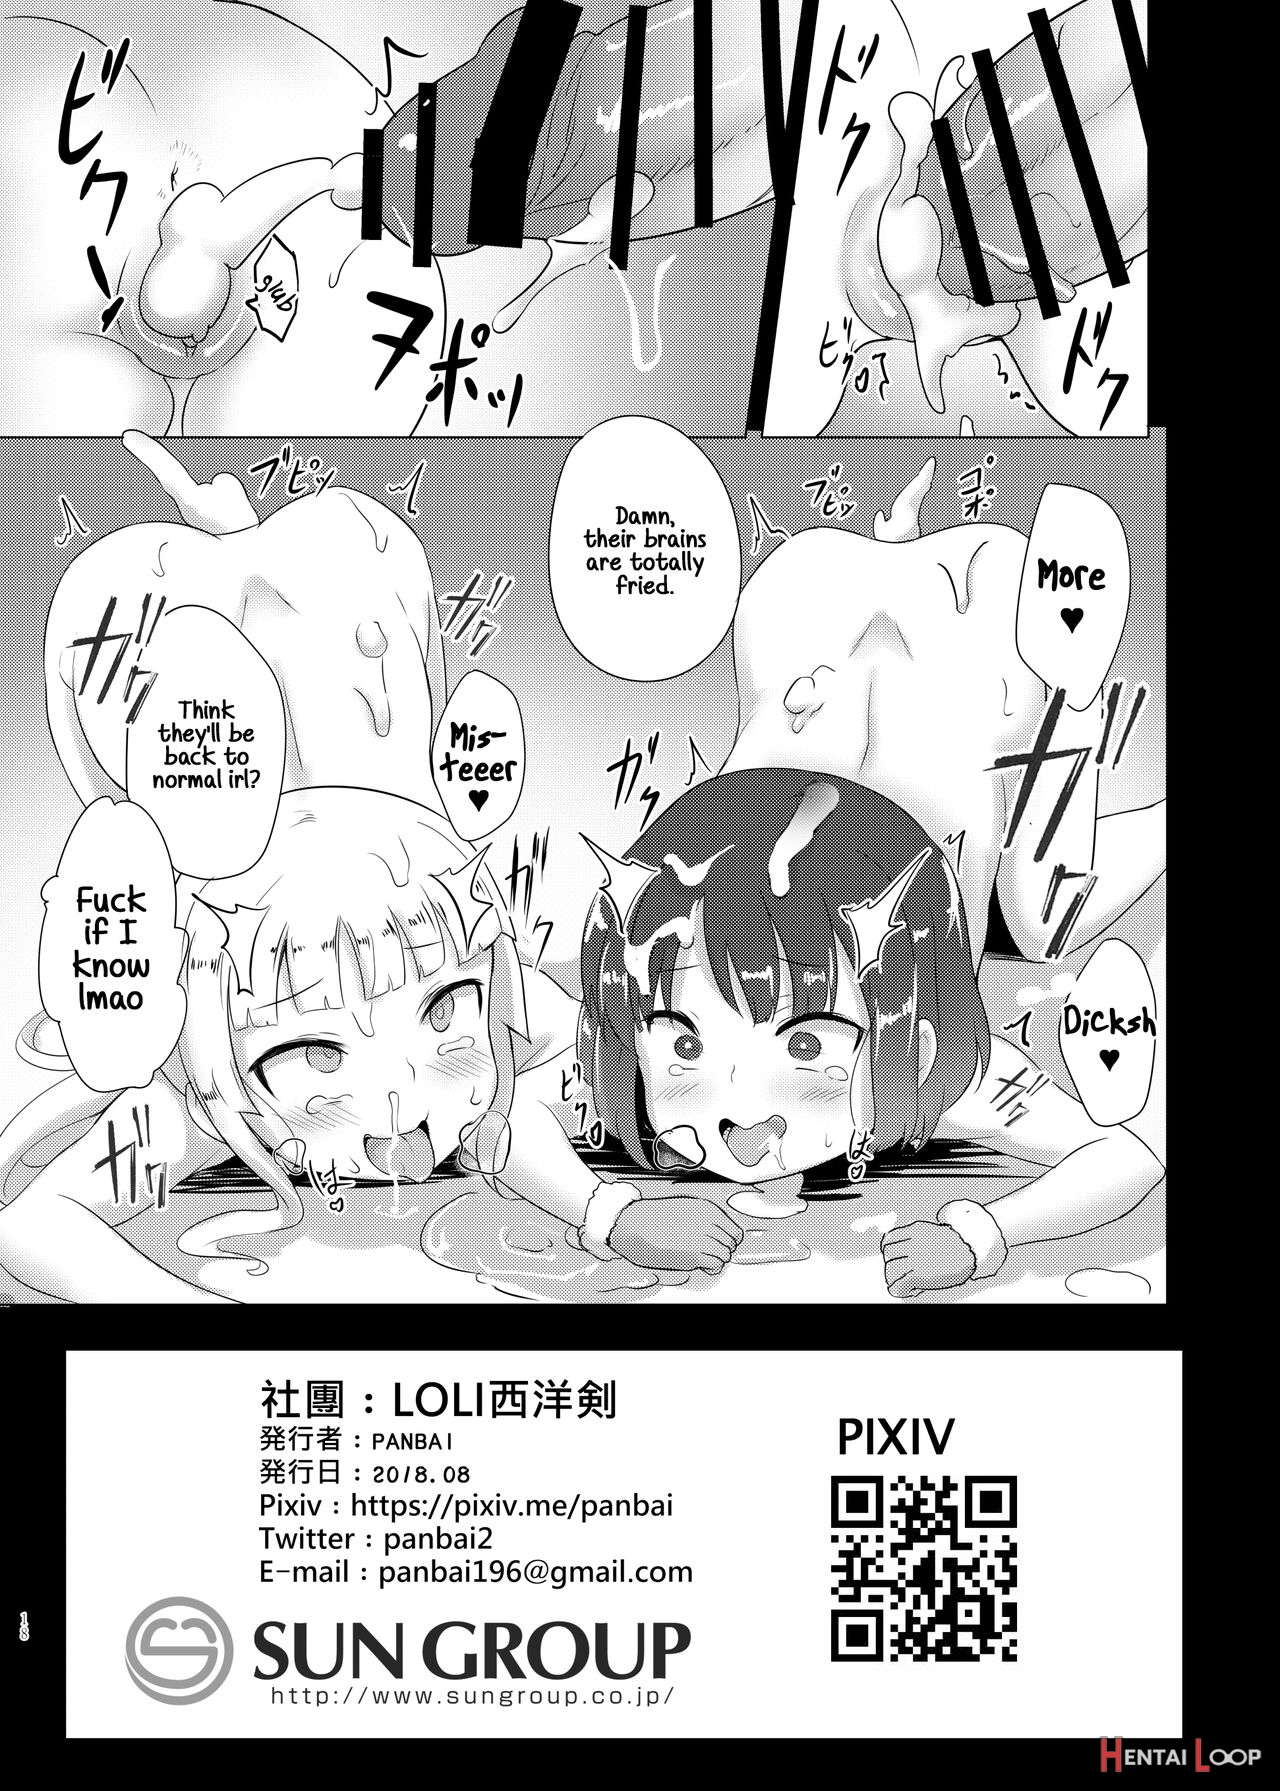 Llenn & Fuka's Loli Sex Party page 17